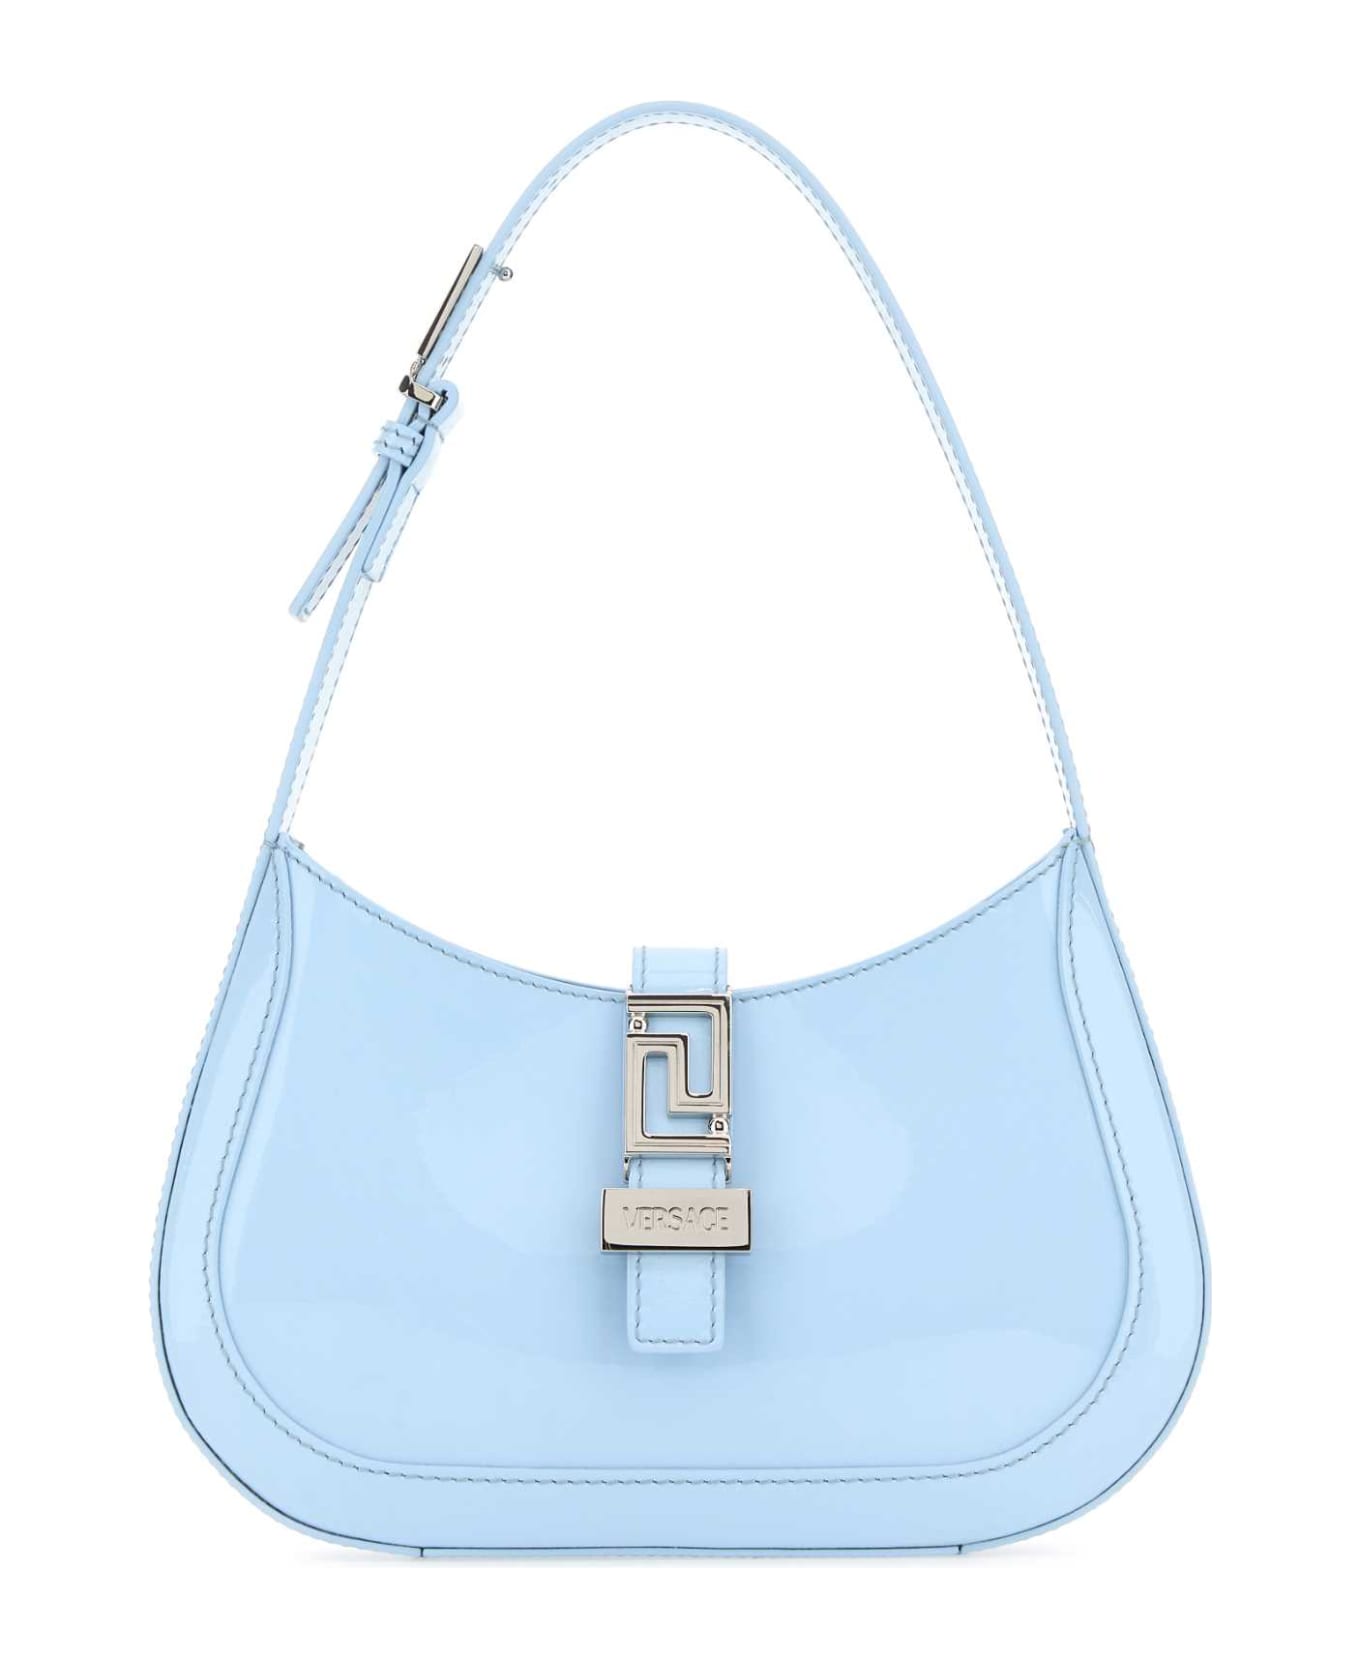 Versace Pastel Light-blue Leather Small Greca Goddess Shoulder Bag - 1VD6P95PASTELBLUEPALLADIUM